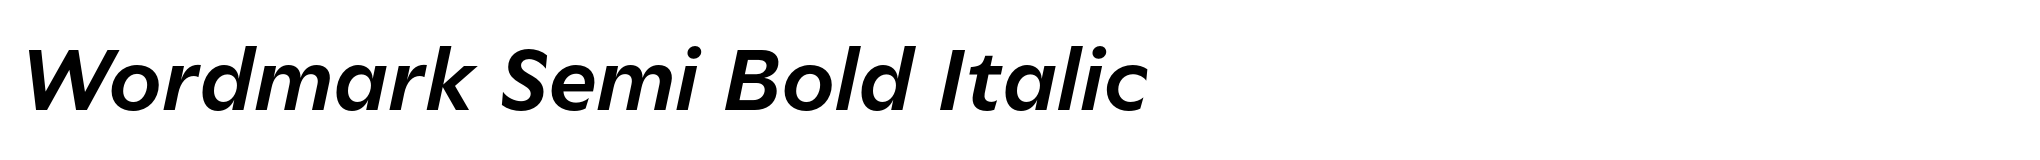 Wordmark Semi Bold Italic image